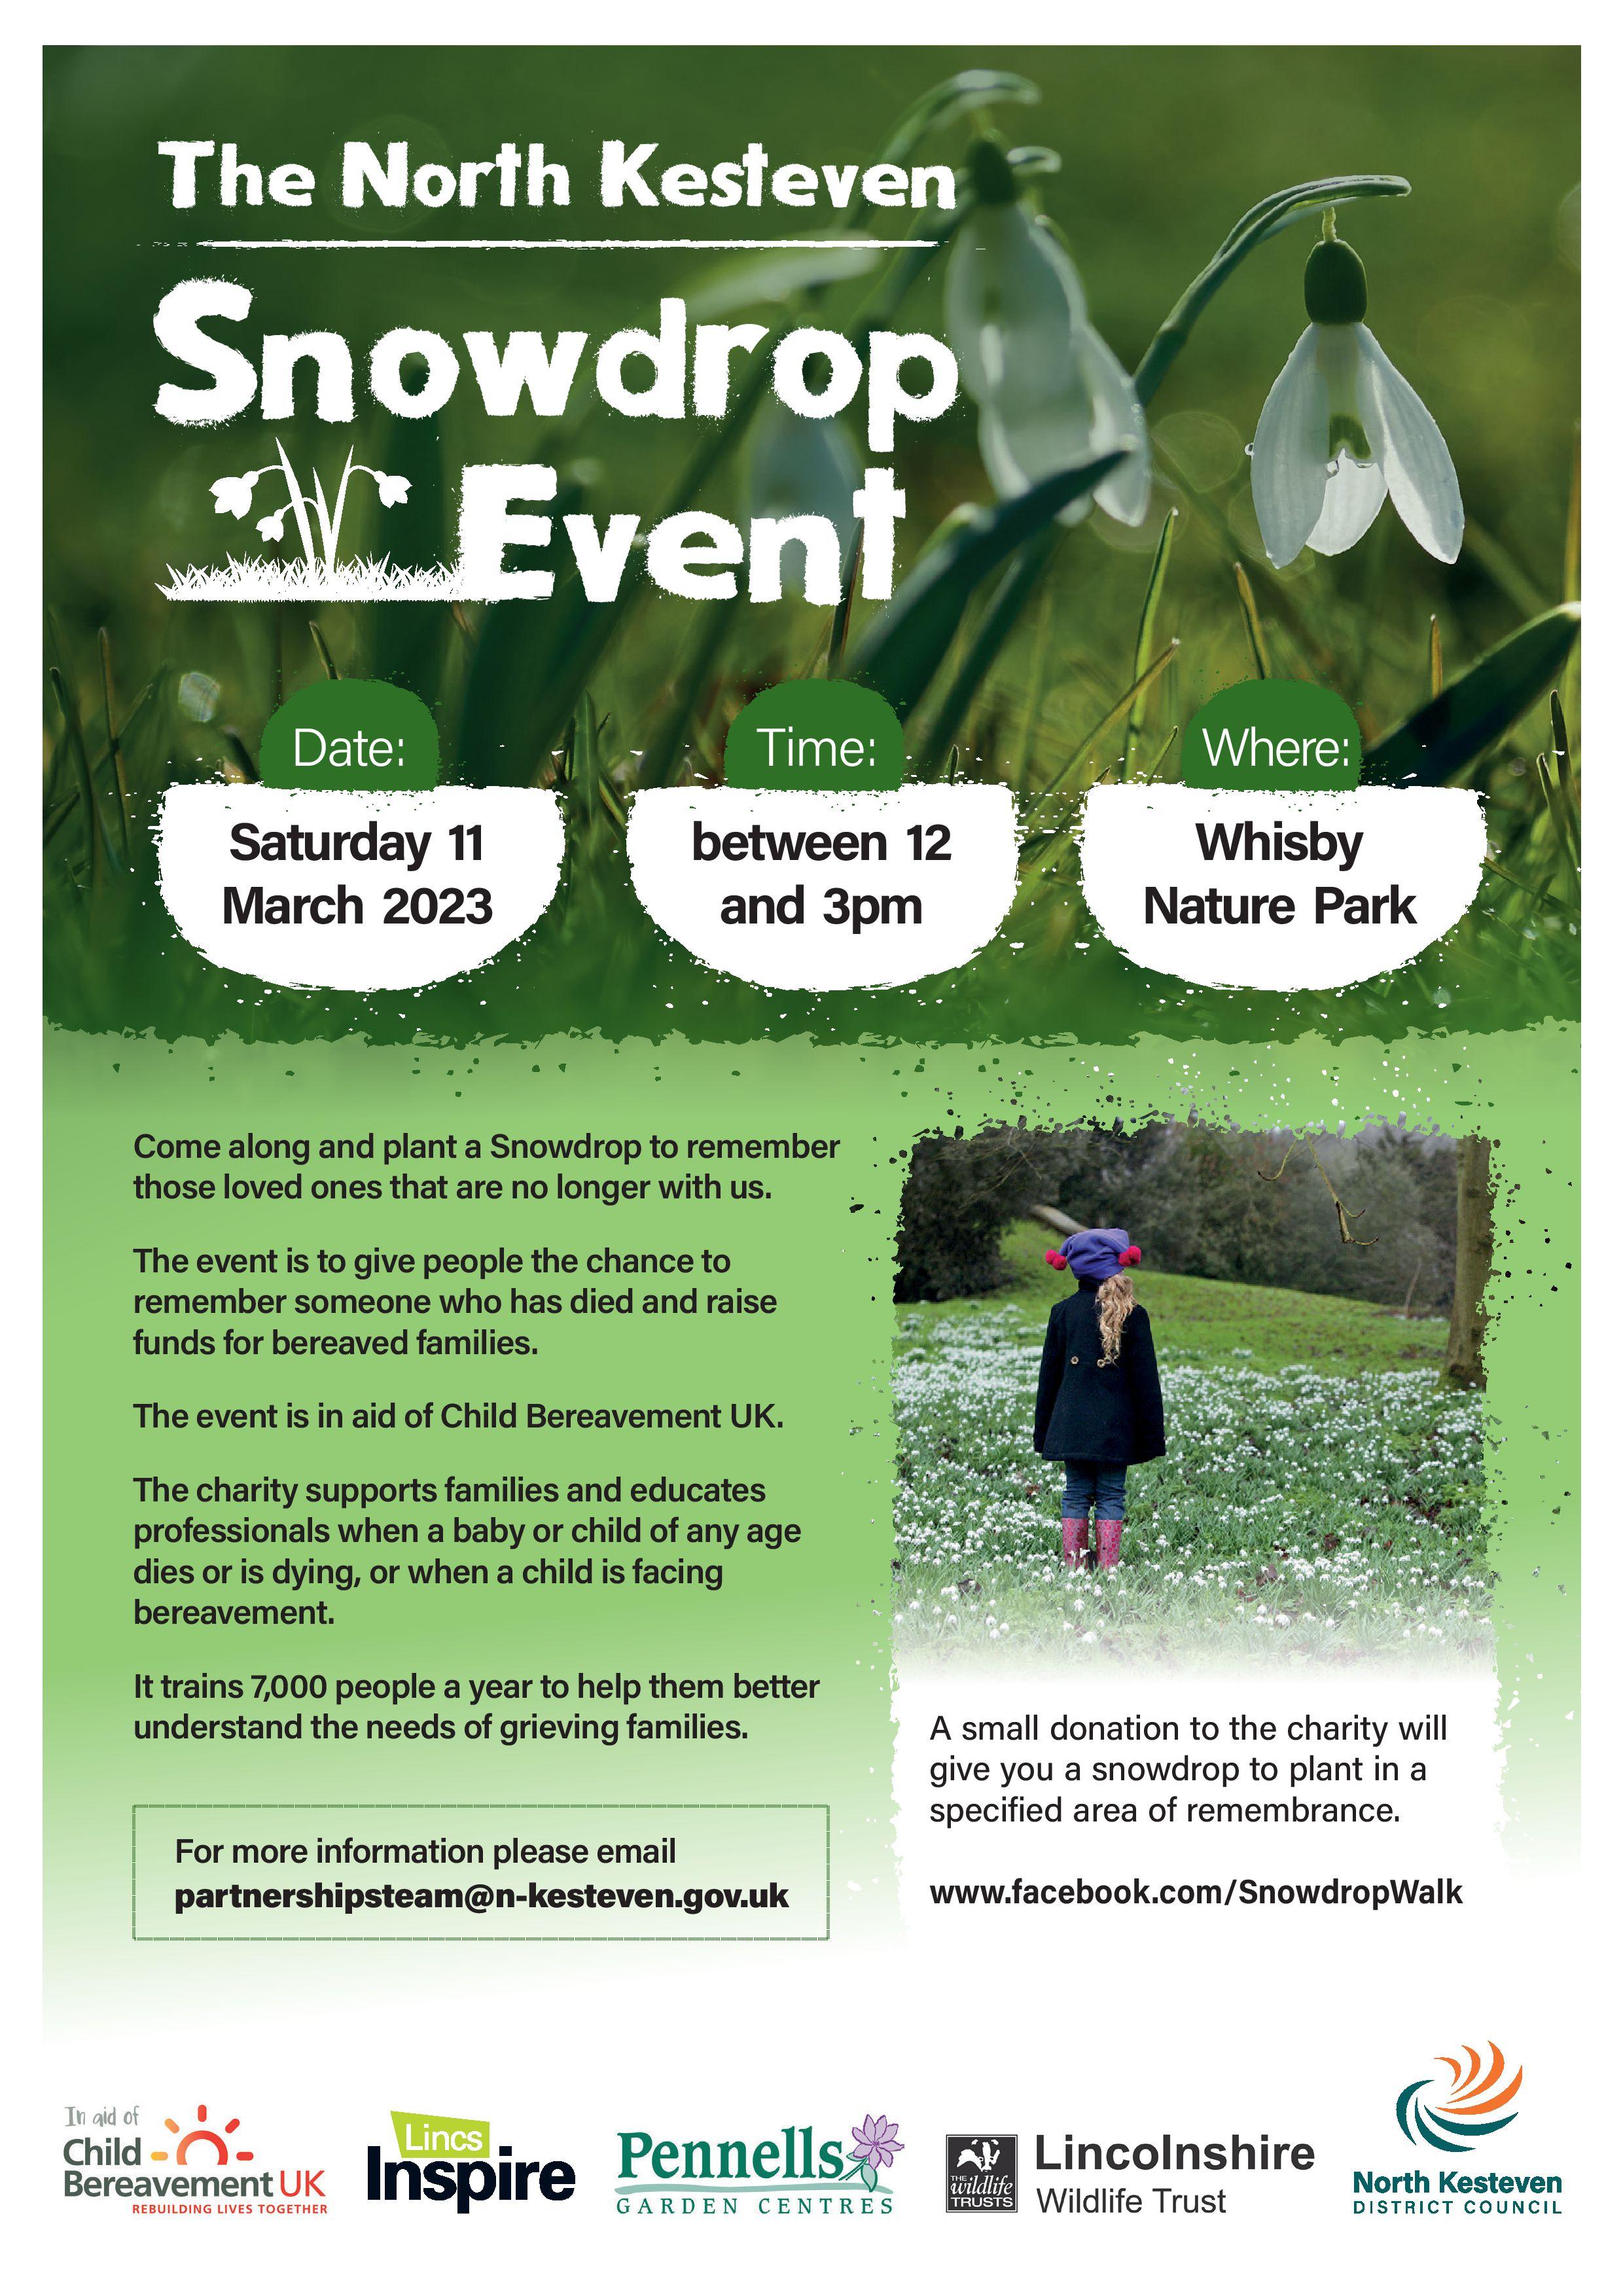 NKDC Snowdrop event